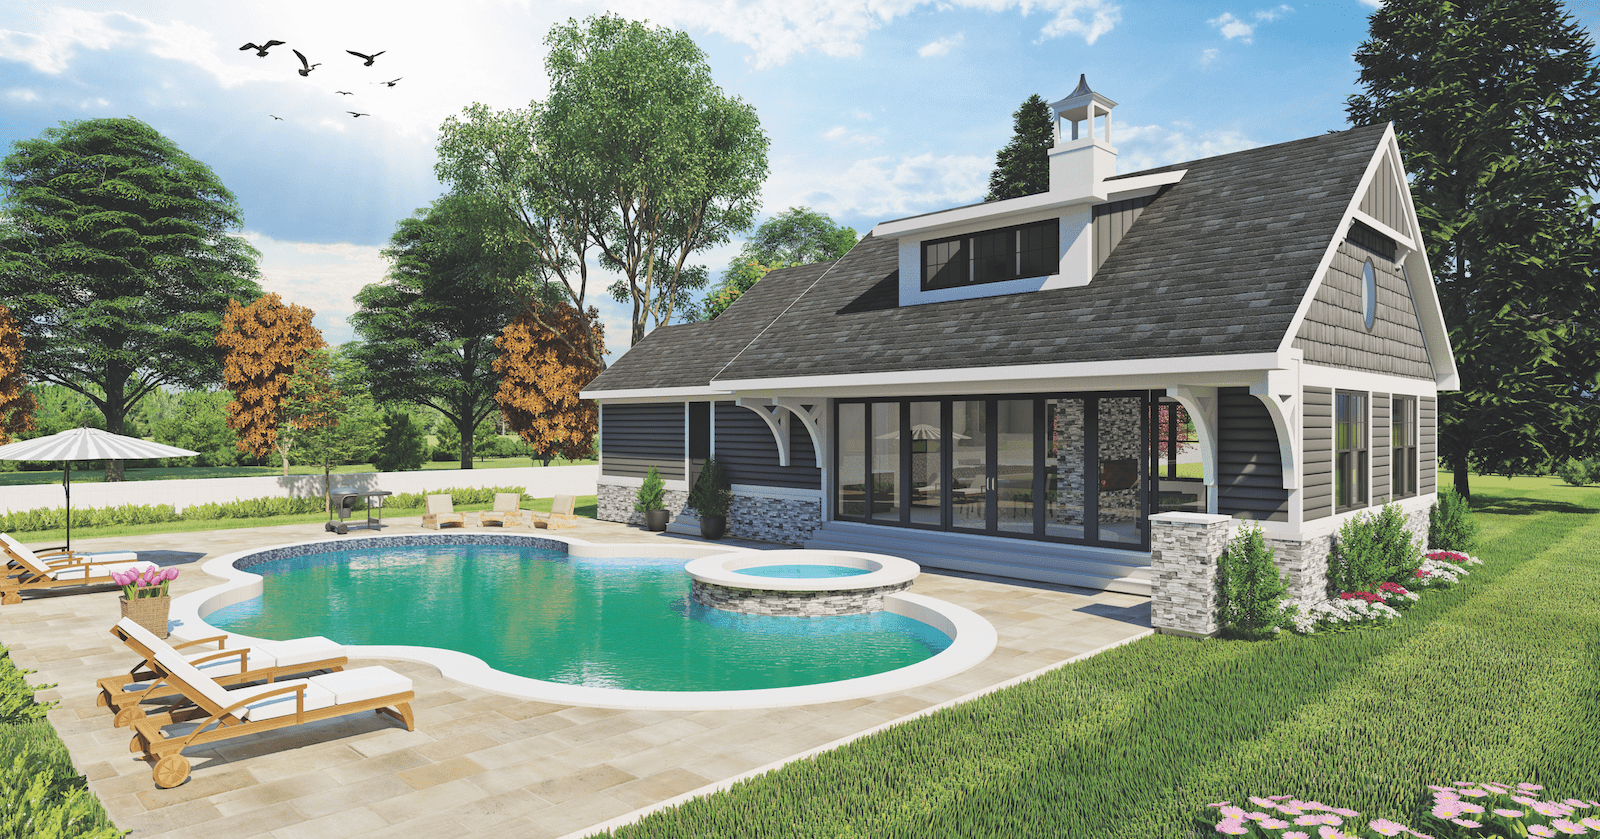 Pool house ADU designed by TK Design & Associates